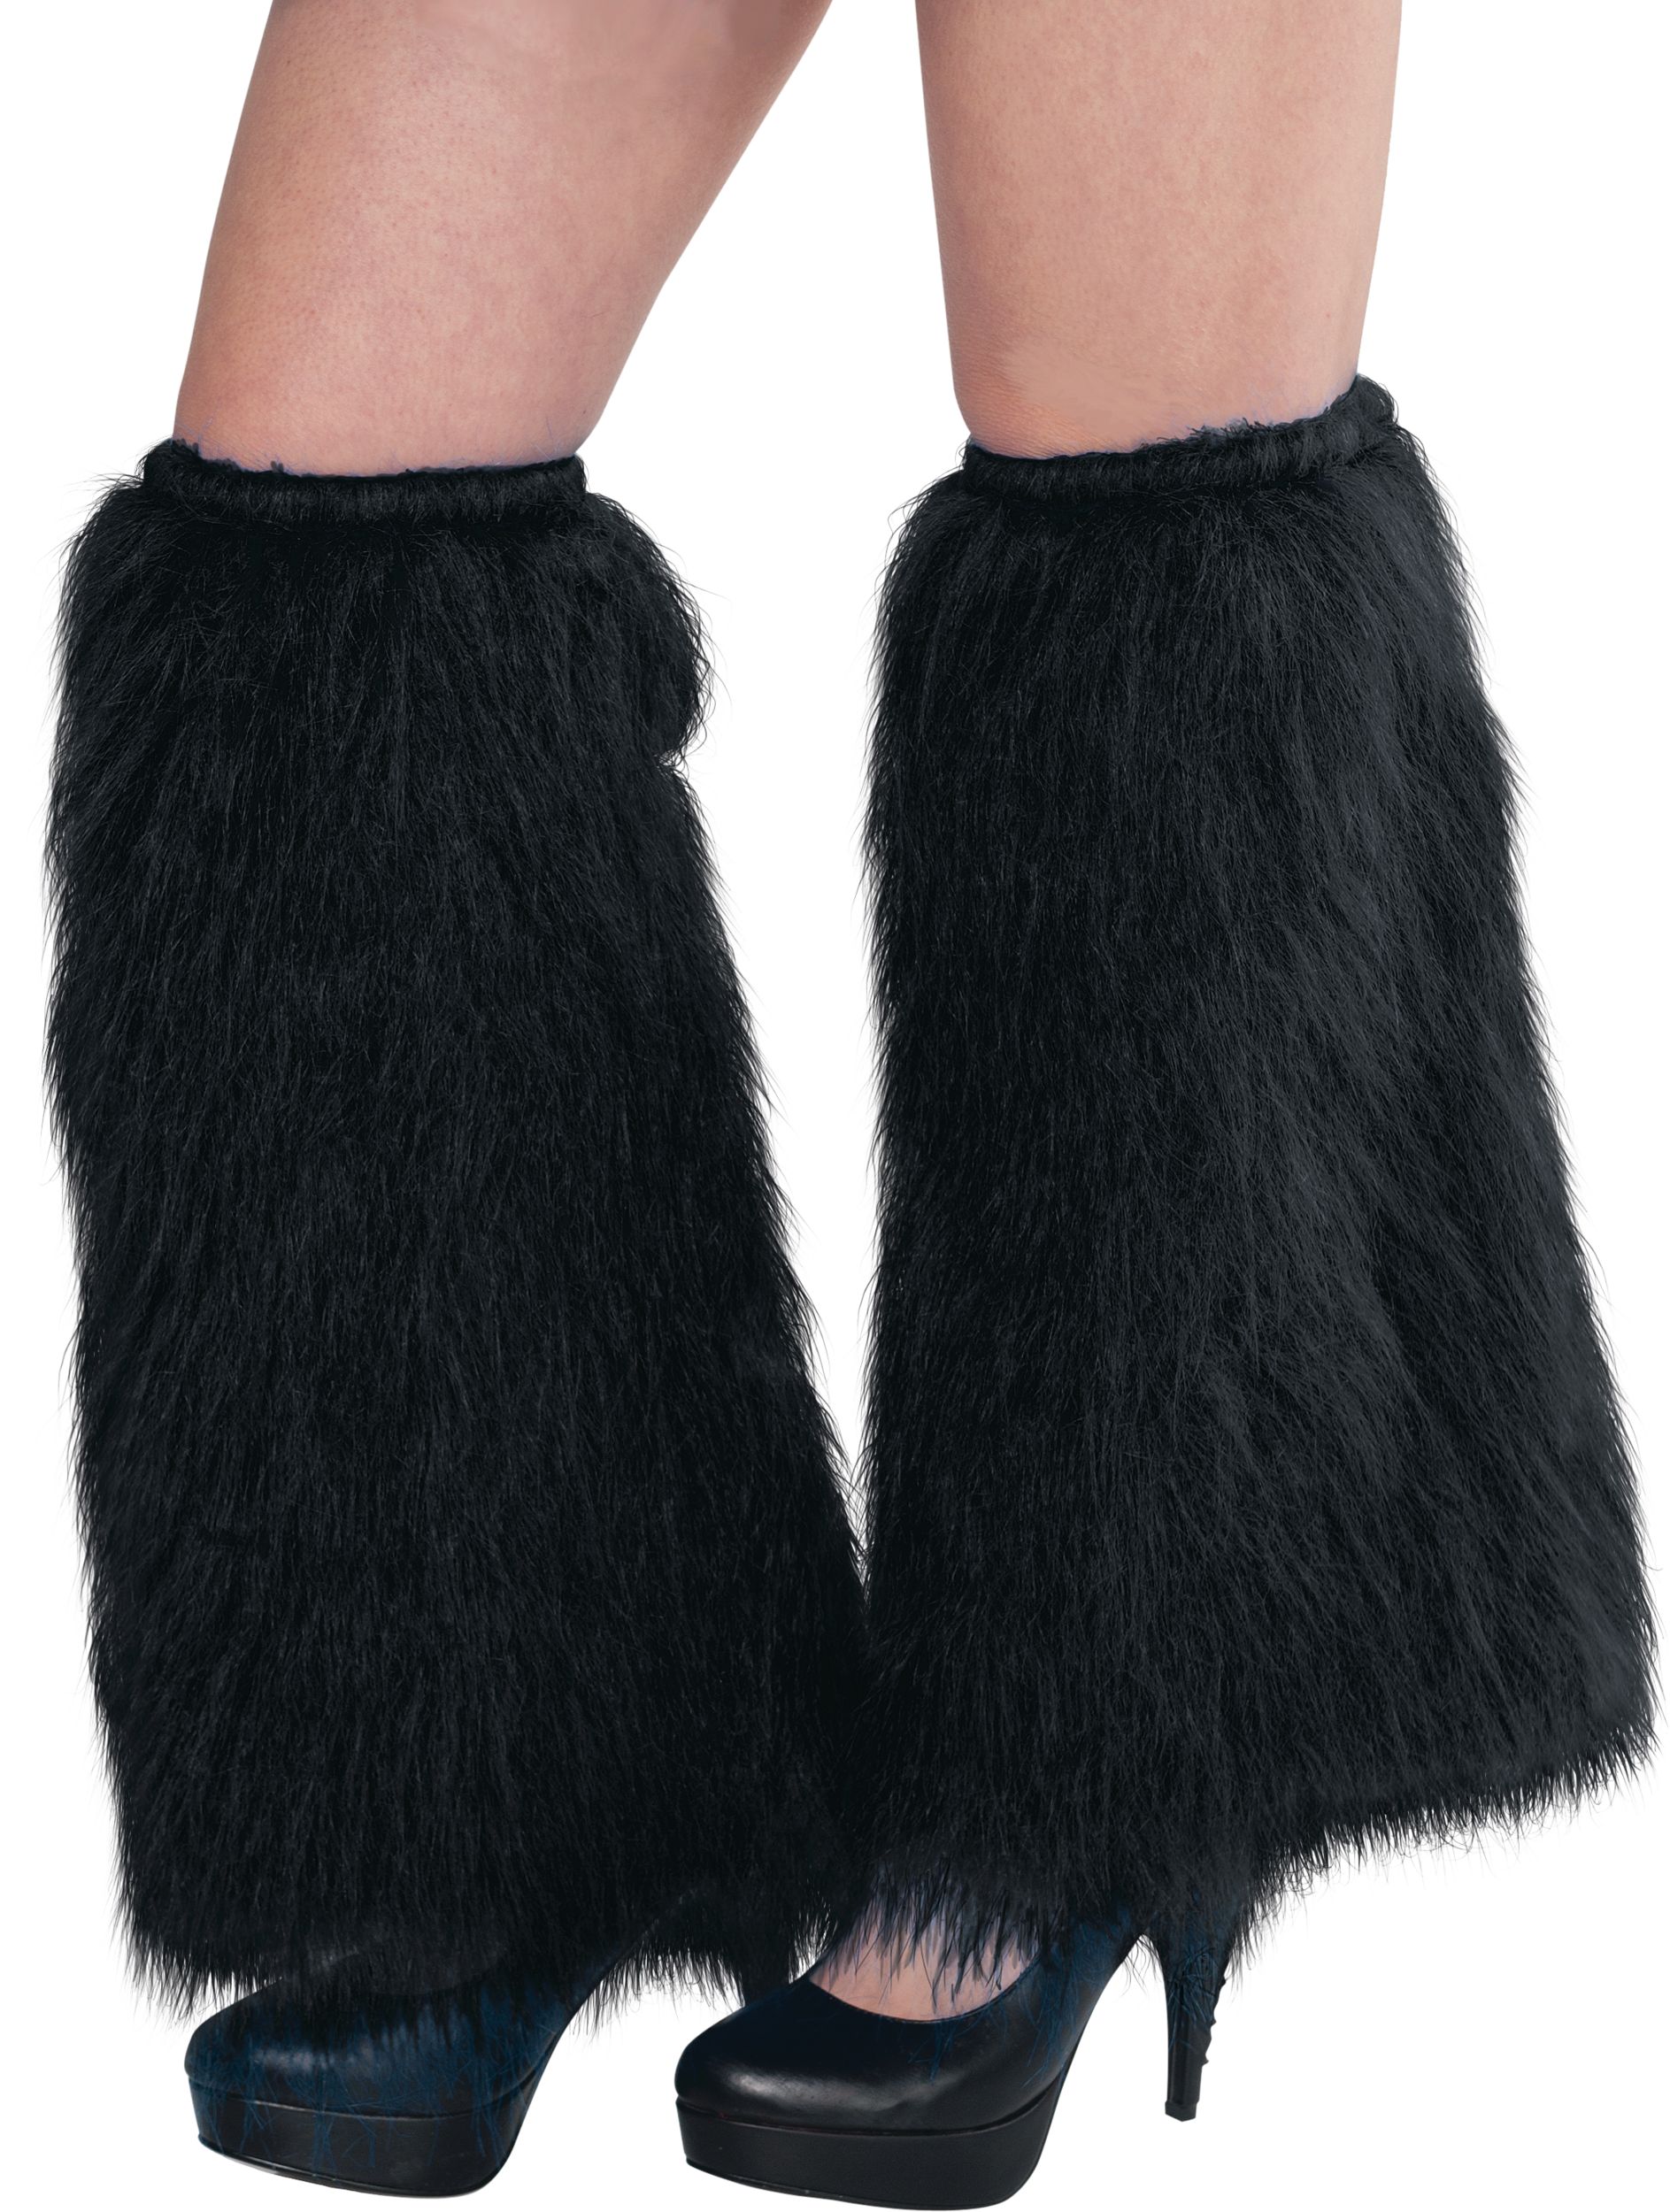  OSPNIEEK Fur Leg Warmers, Furry Leg Warmers for Womens